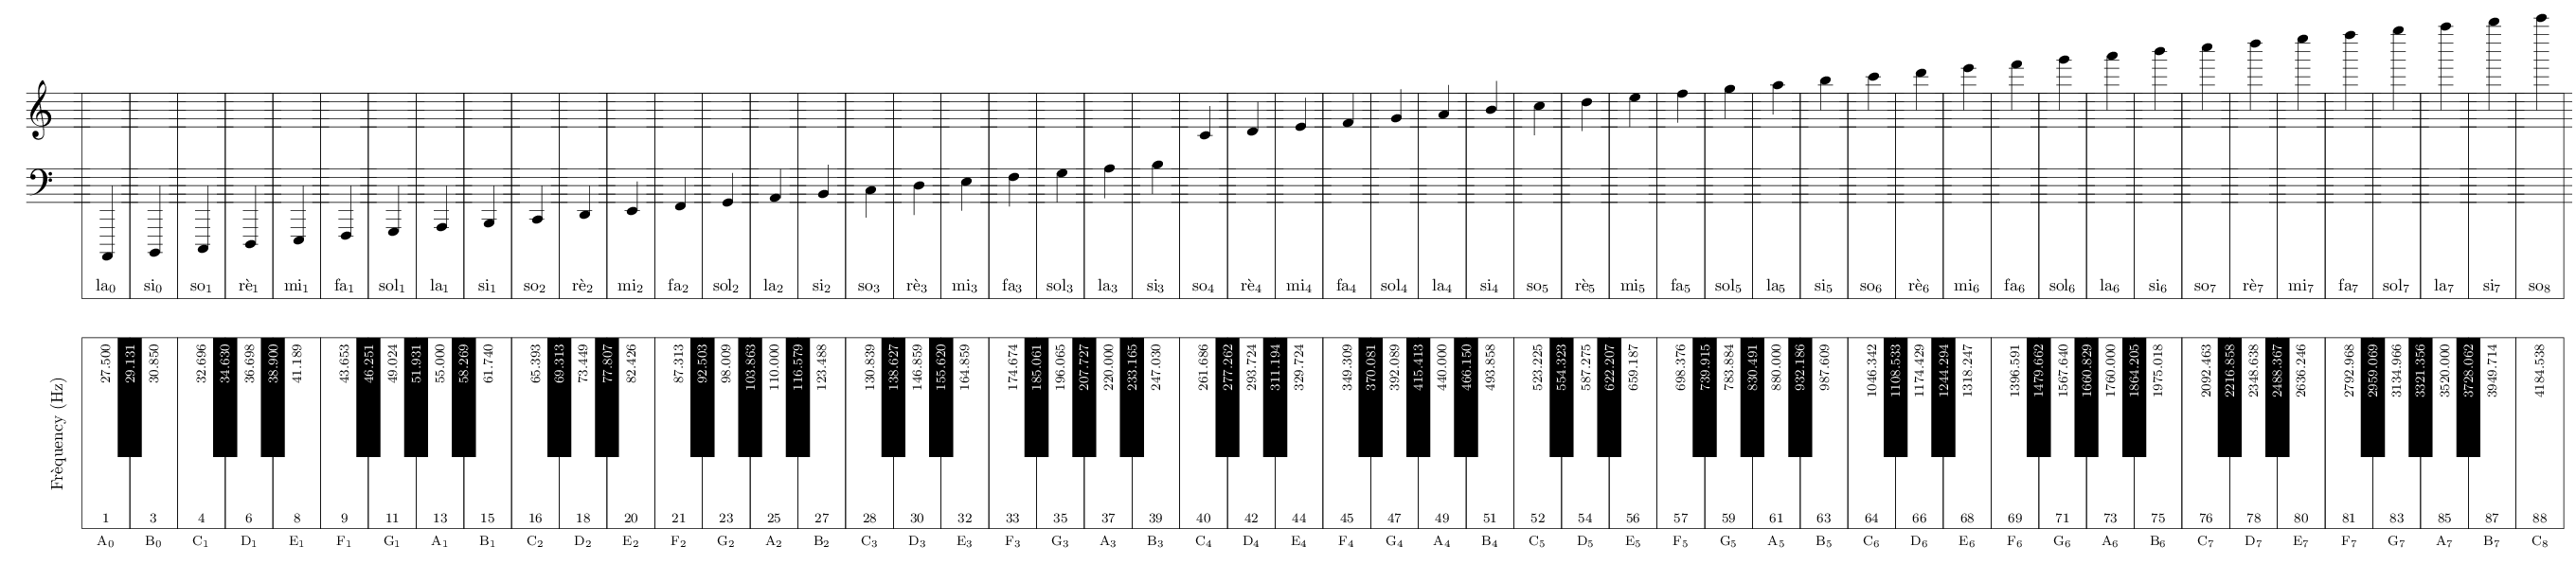 tikz pgf - Range of a piano: keyboard vs staves - TeX - LaTeX ...